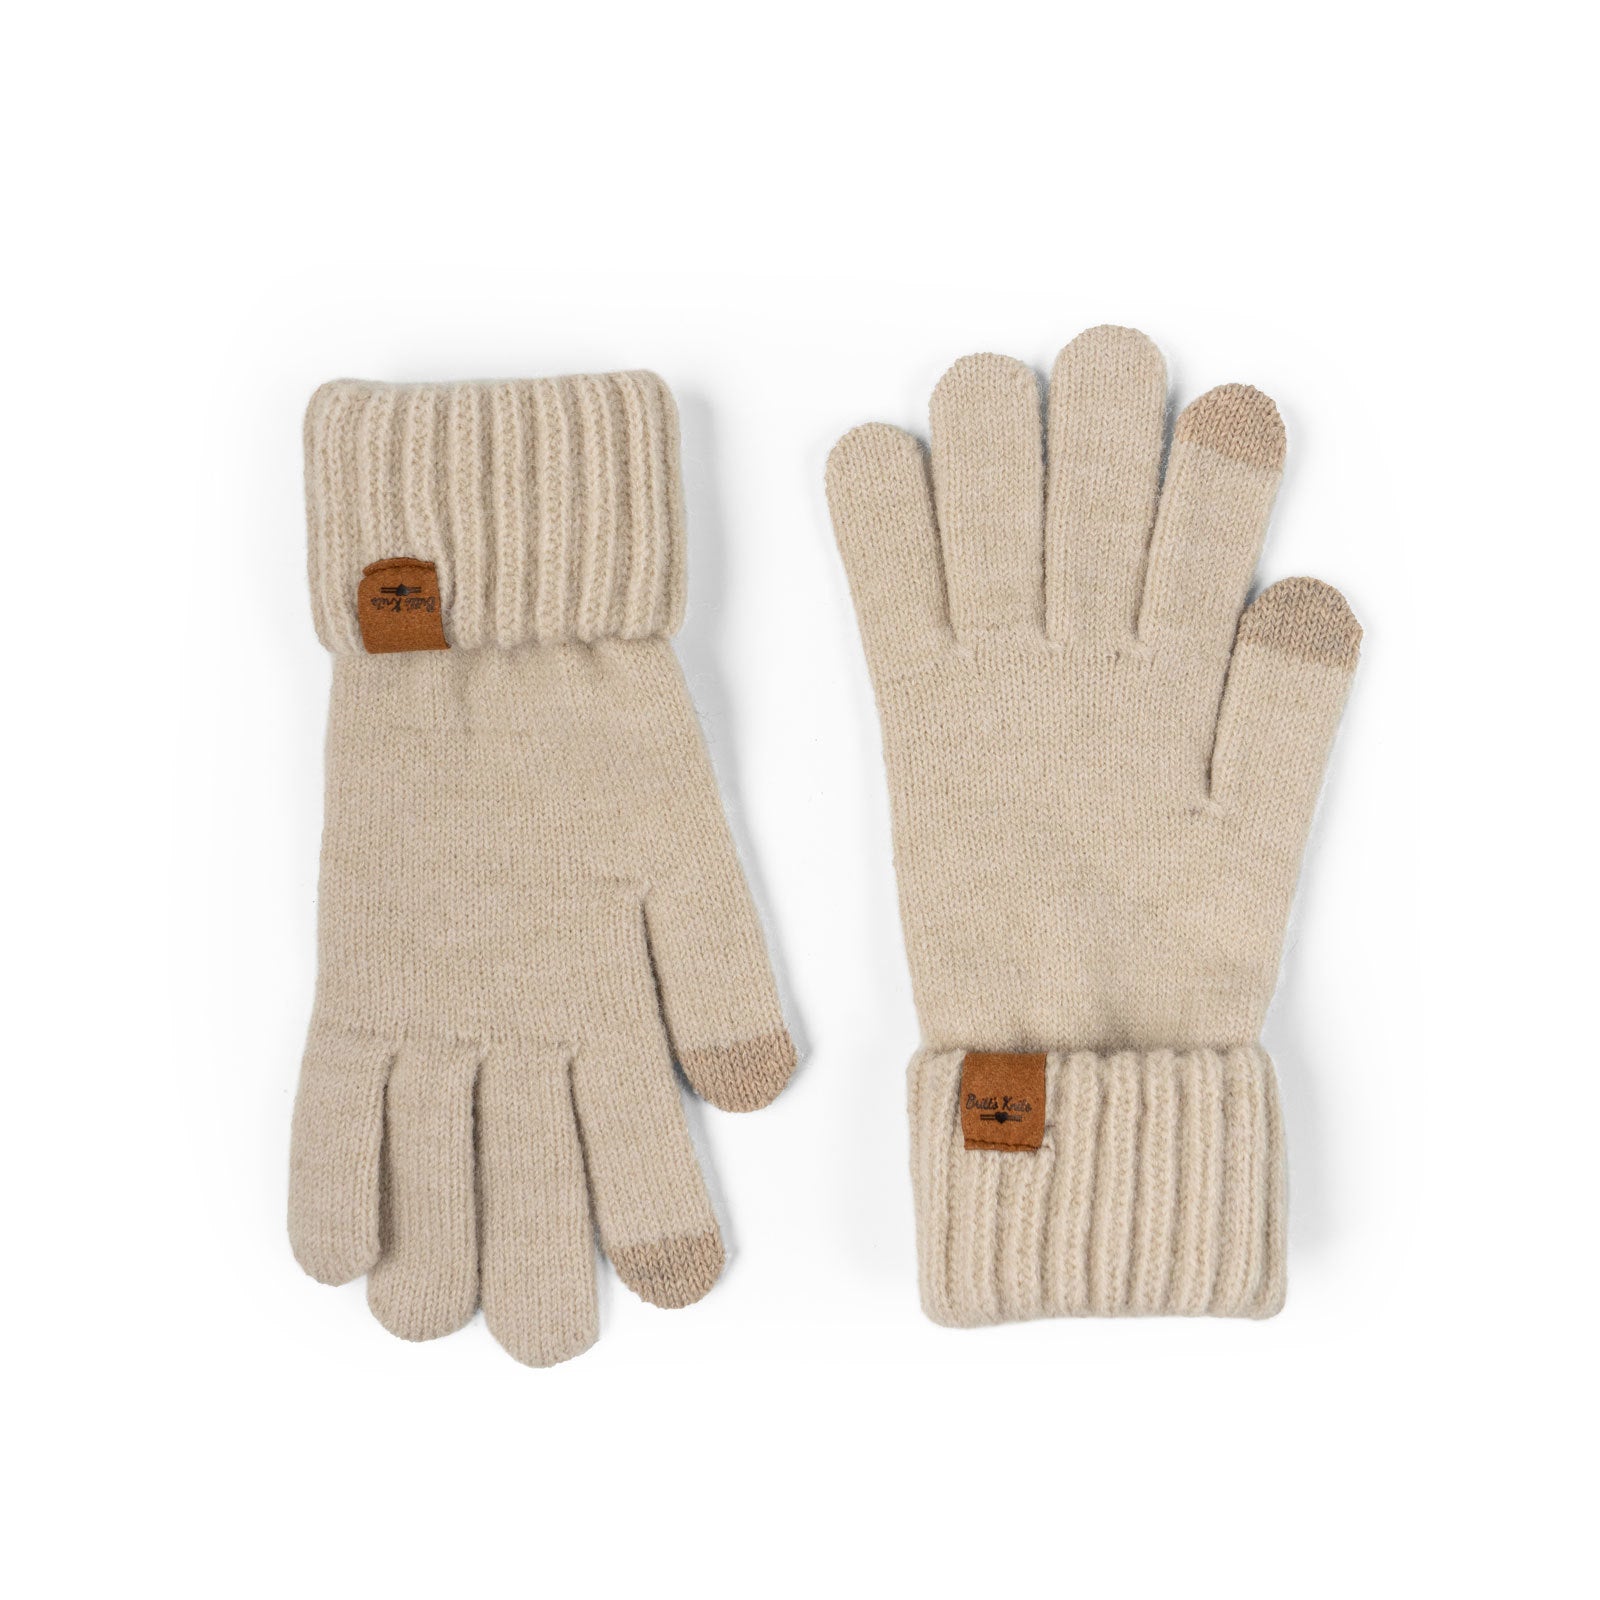 Mainstay Gloves